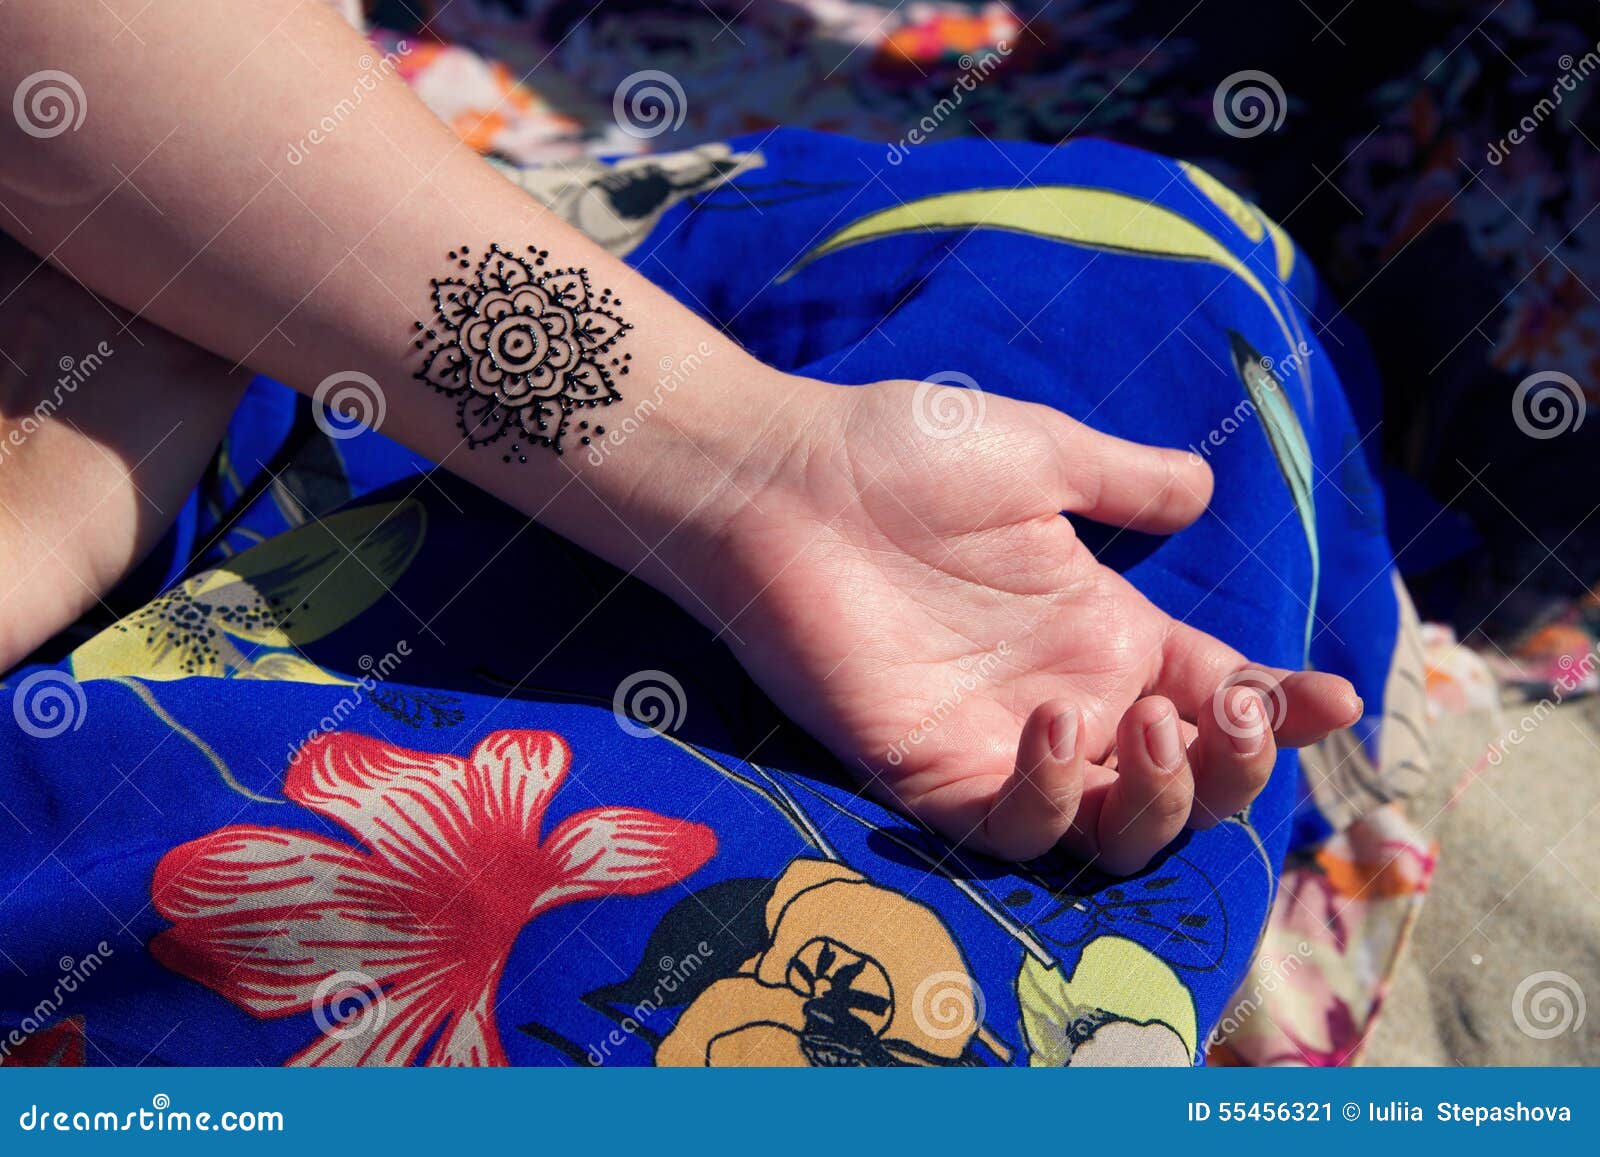 henna tattoo mehendy on hand mandala